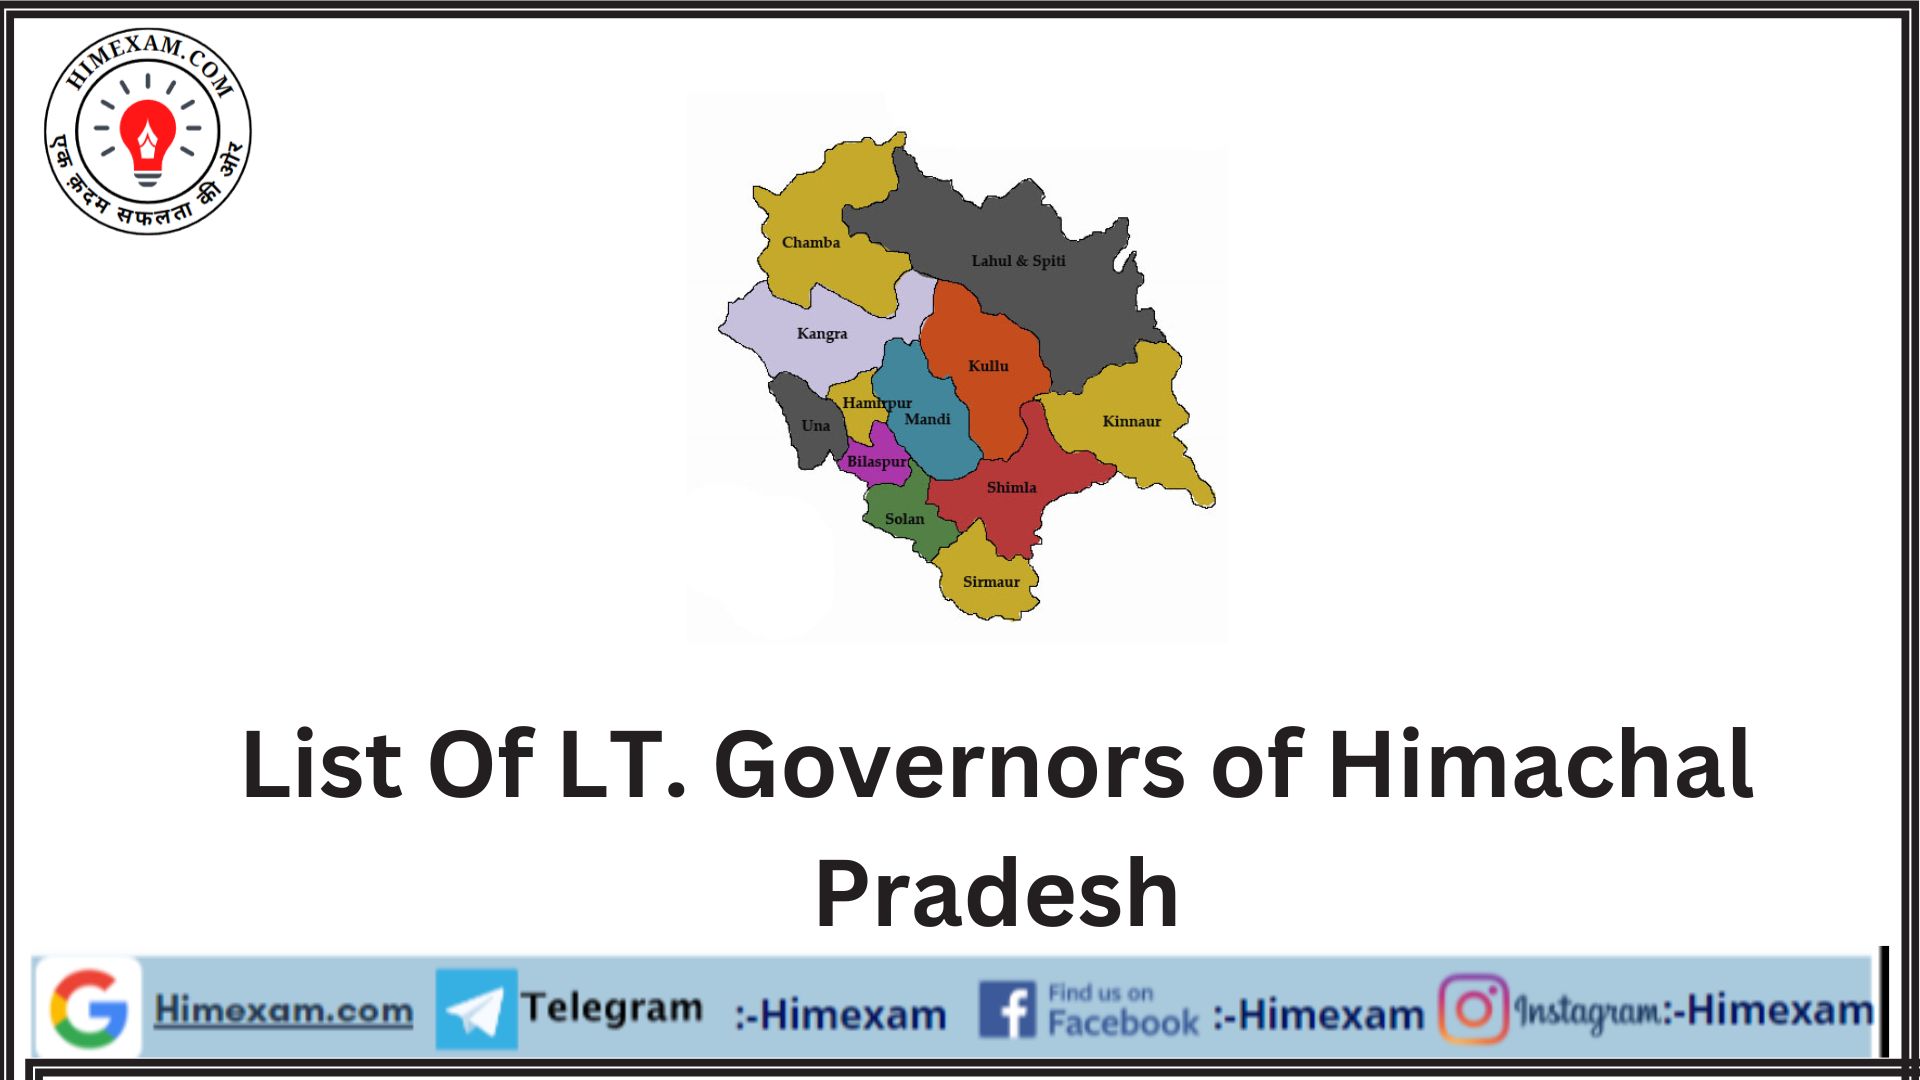 List Of LT. Governors of Himachal Pradesh